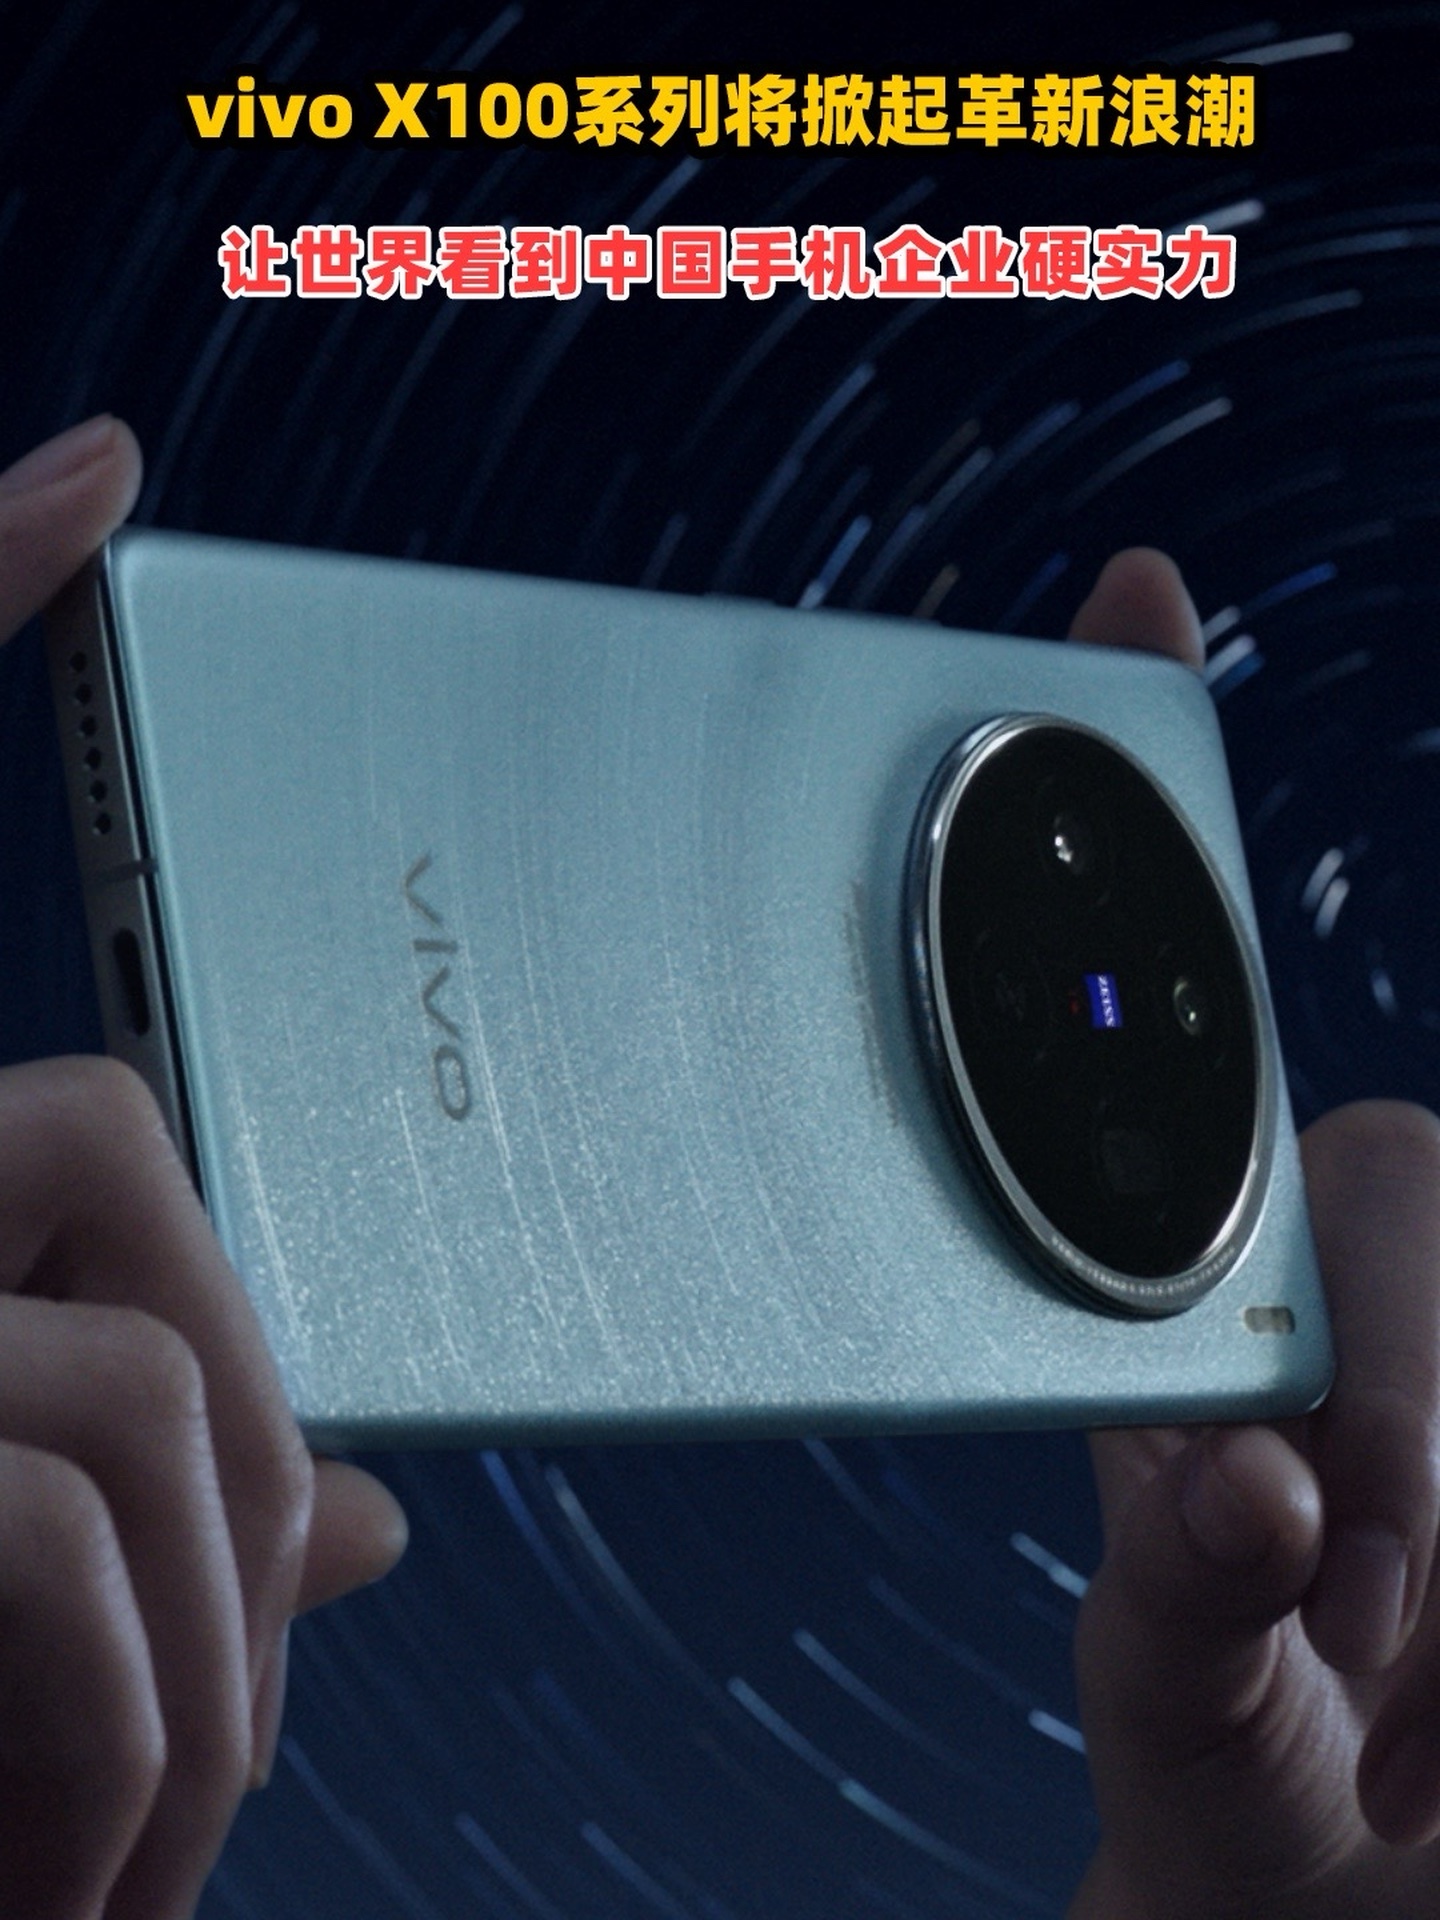 Vivo X100 Pro design officially teased - Gizmochina